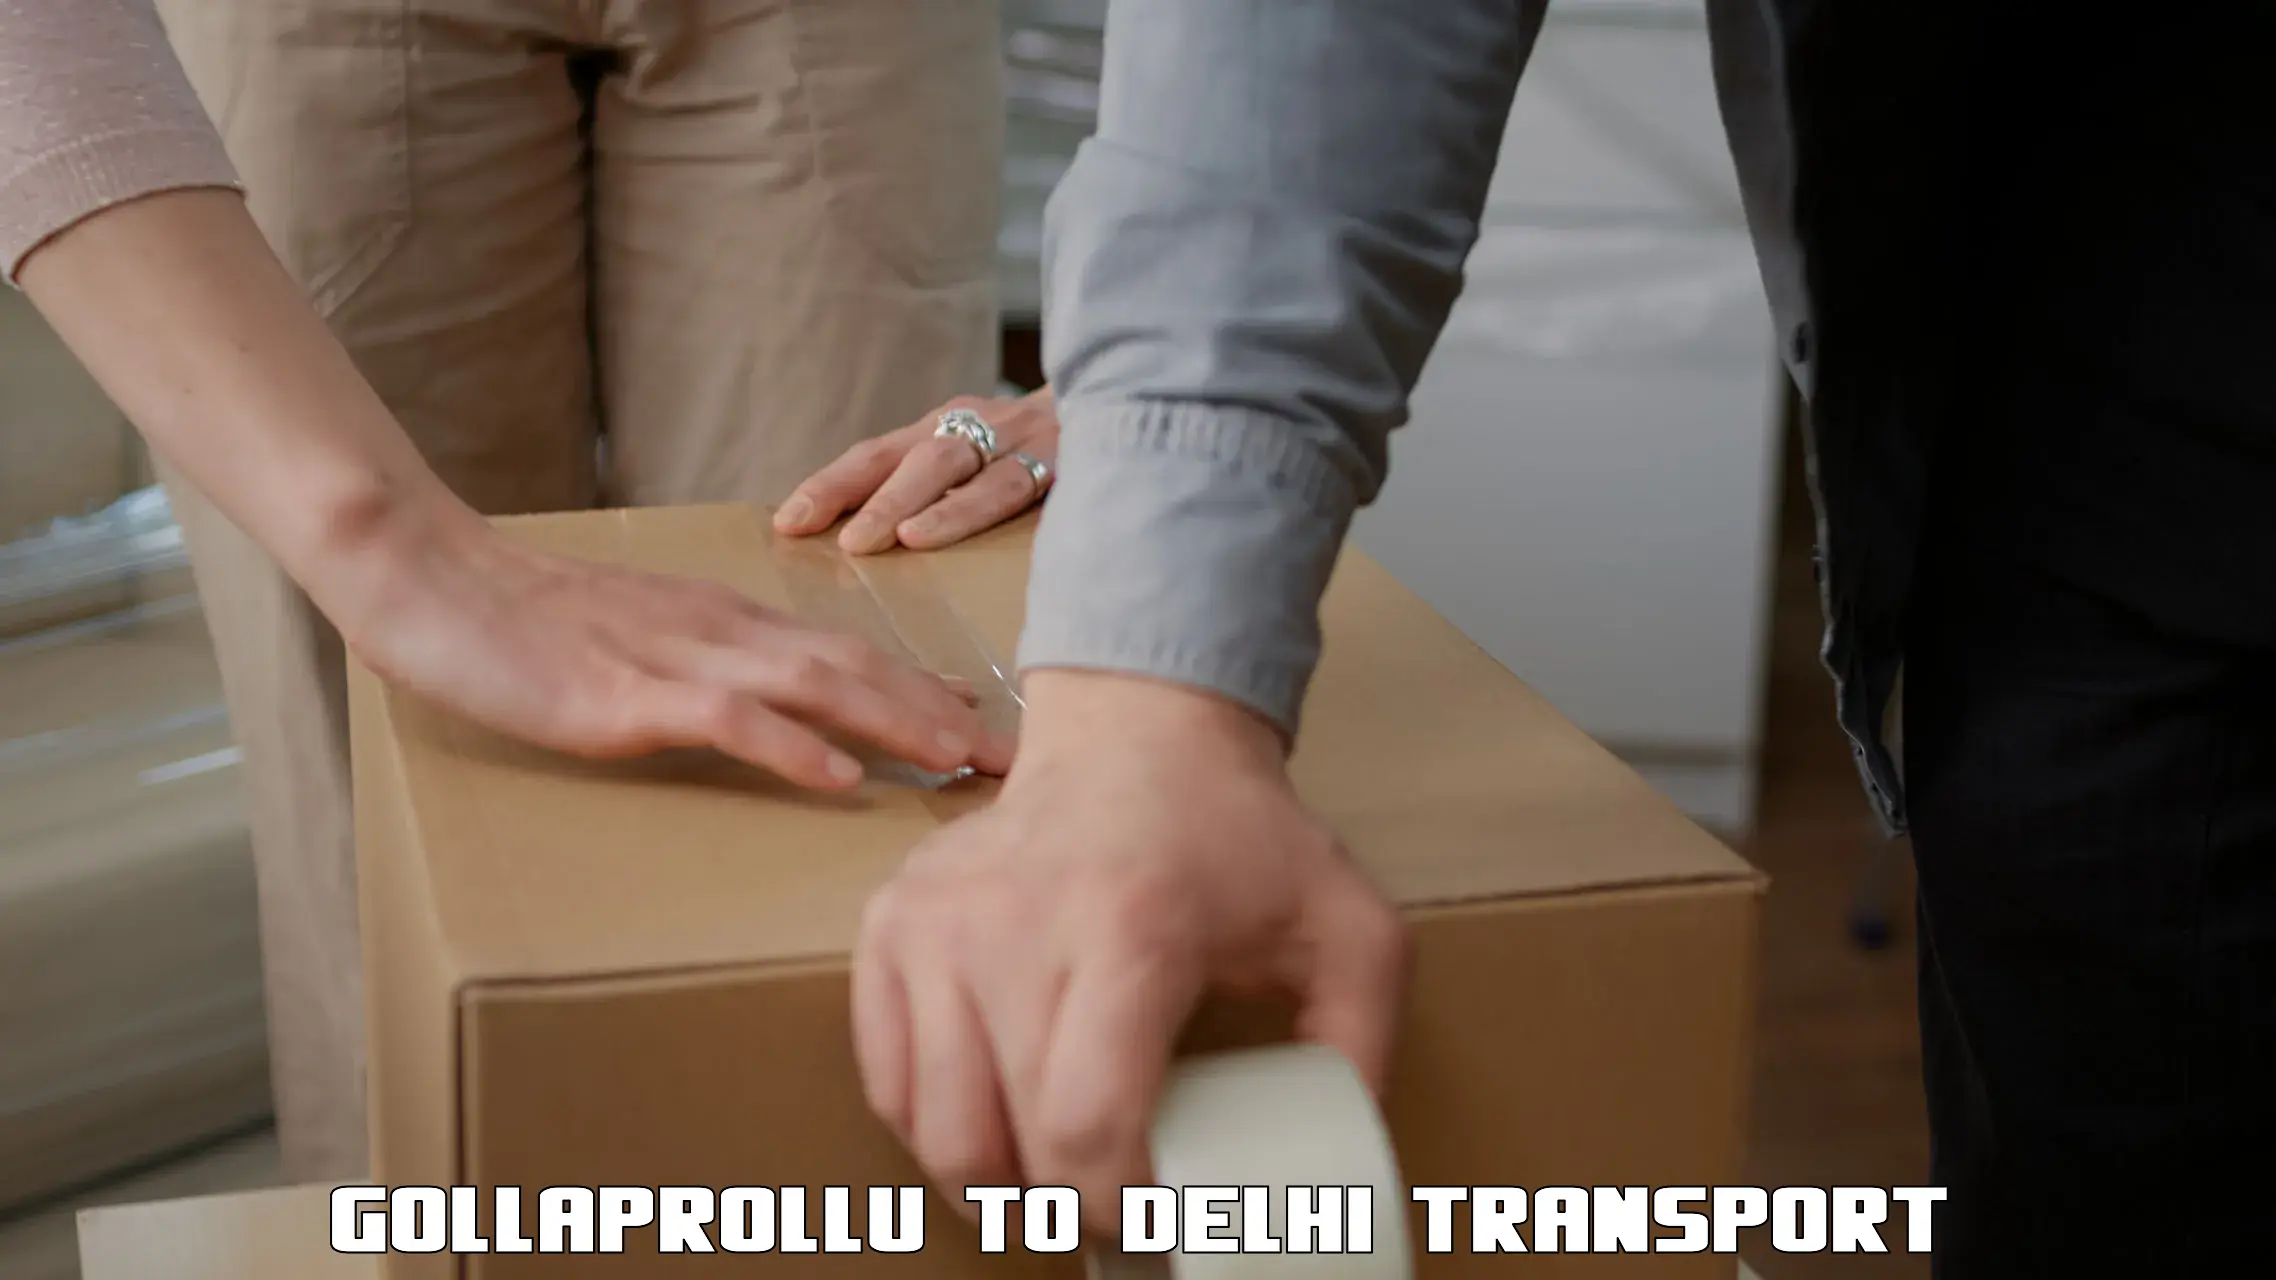 Furniture transport service Gollaprollu to IIT Delhi